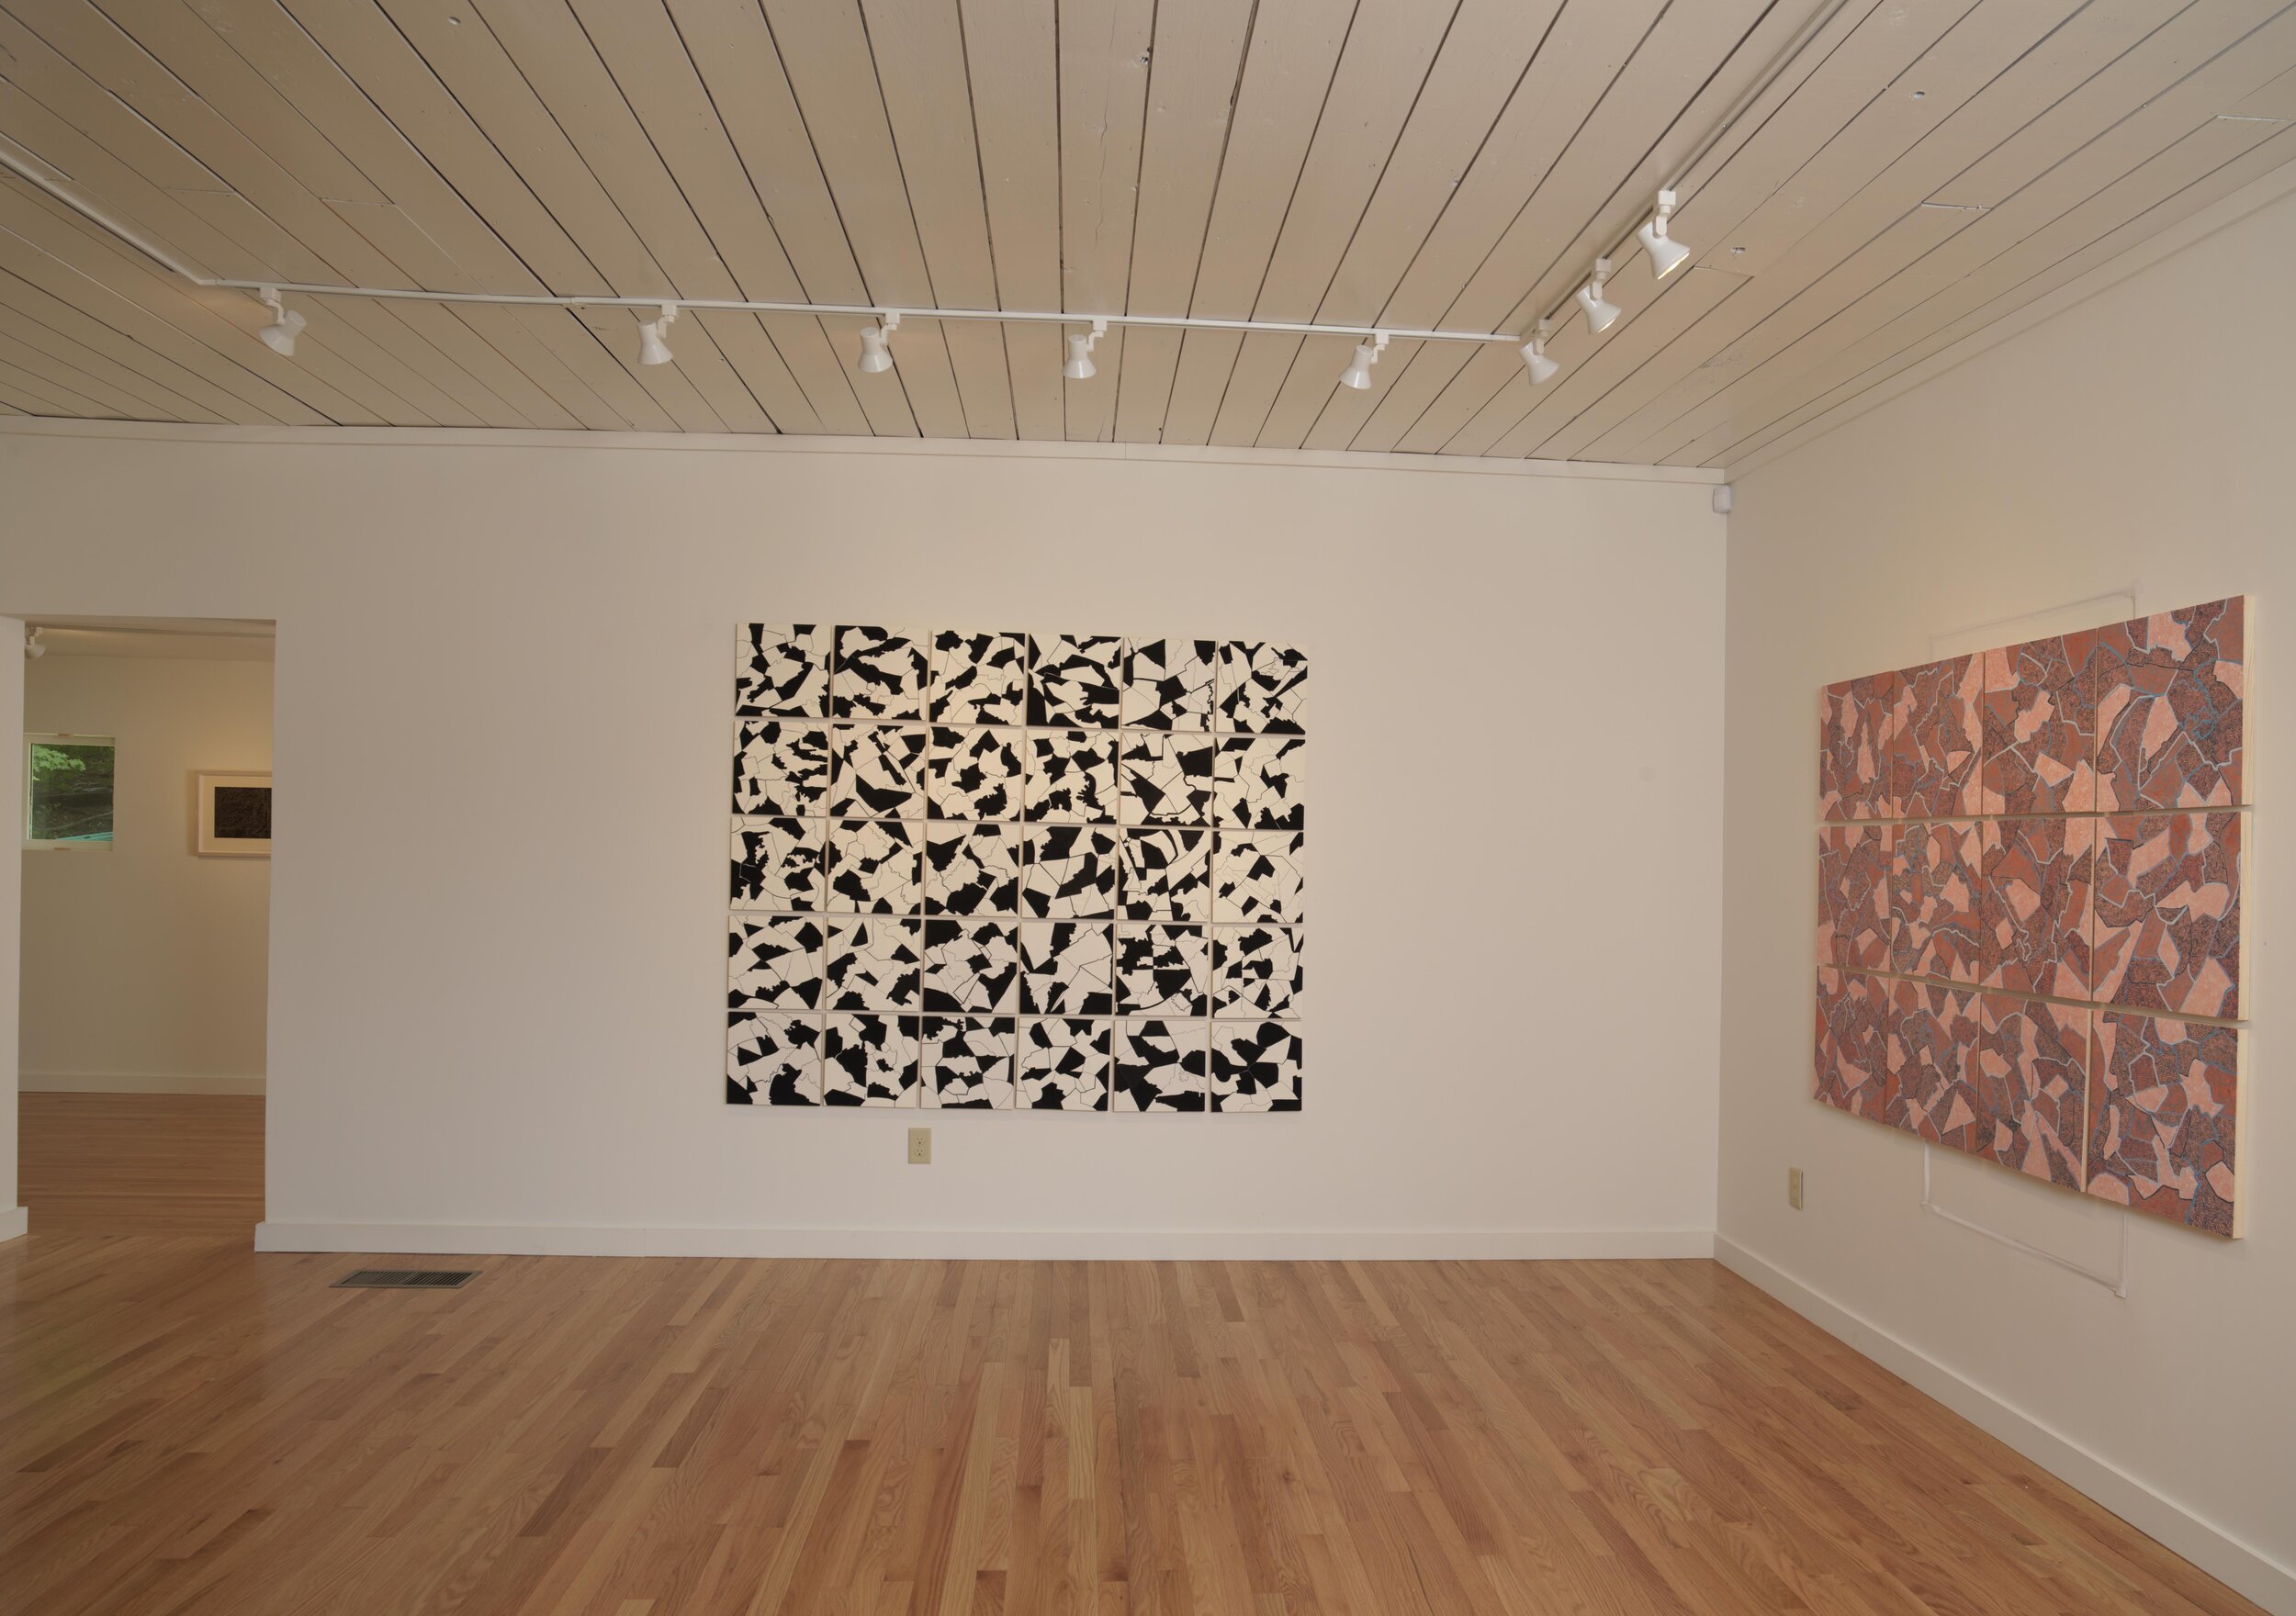    Grids Exhibiton, 2015   Cynthia Reeves Gallery  WaIpol, New Hampshire 